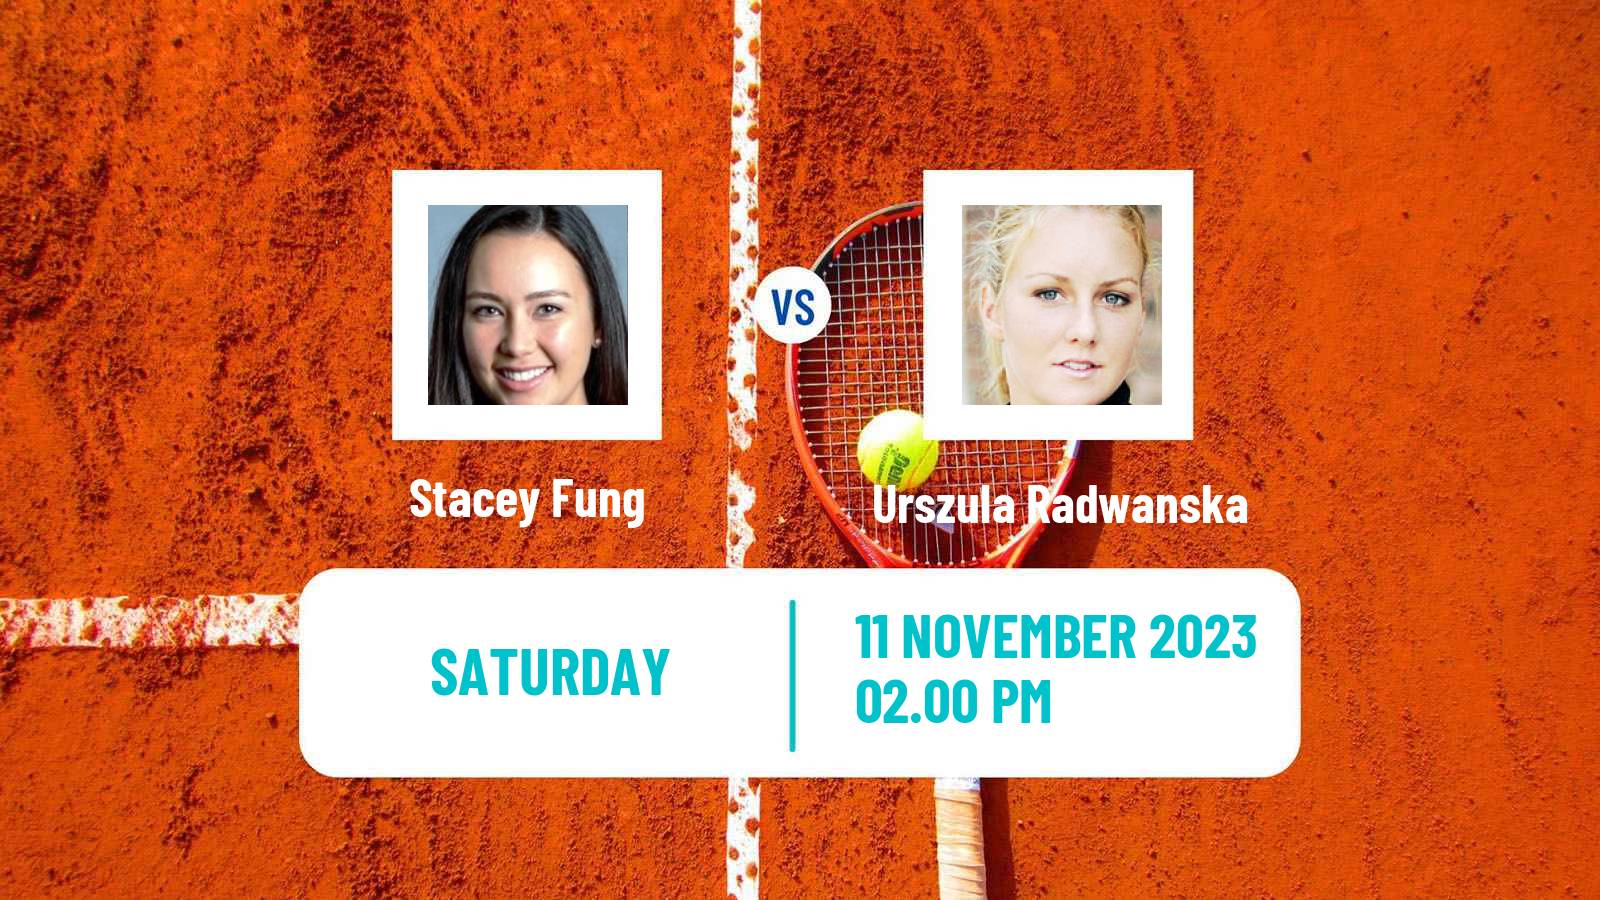 Tennis ITF W60 H Calgary Women Stacey Fung - Urszula Radwanska